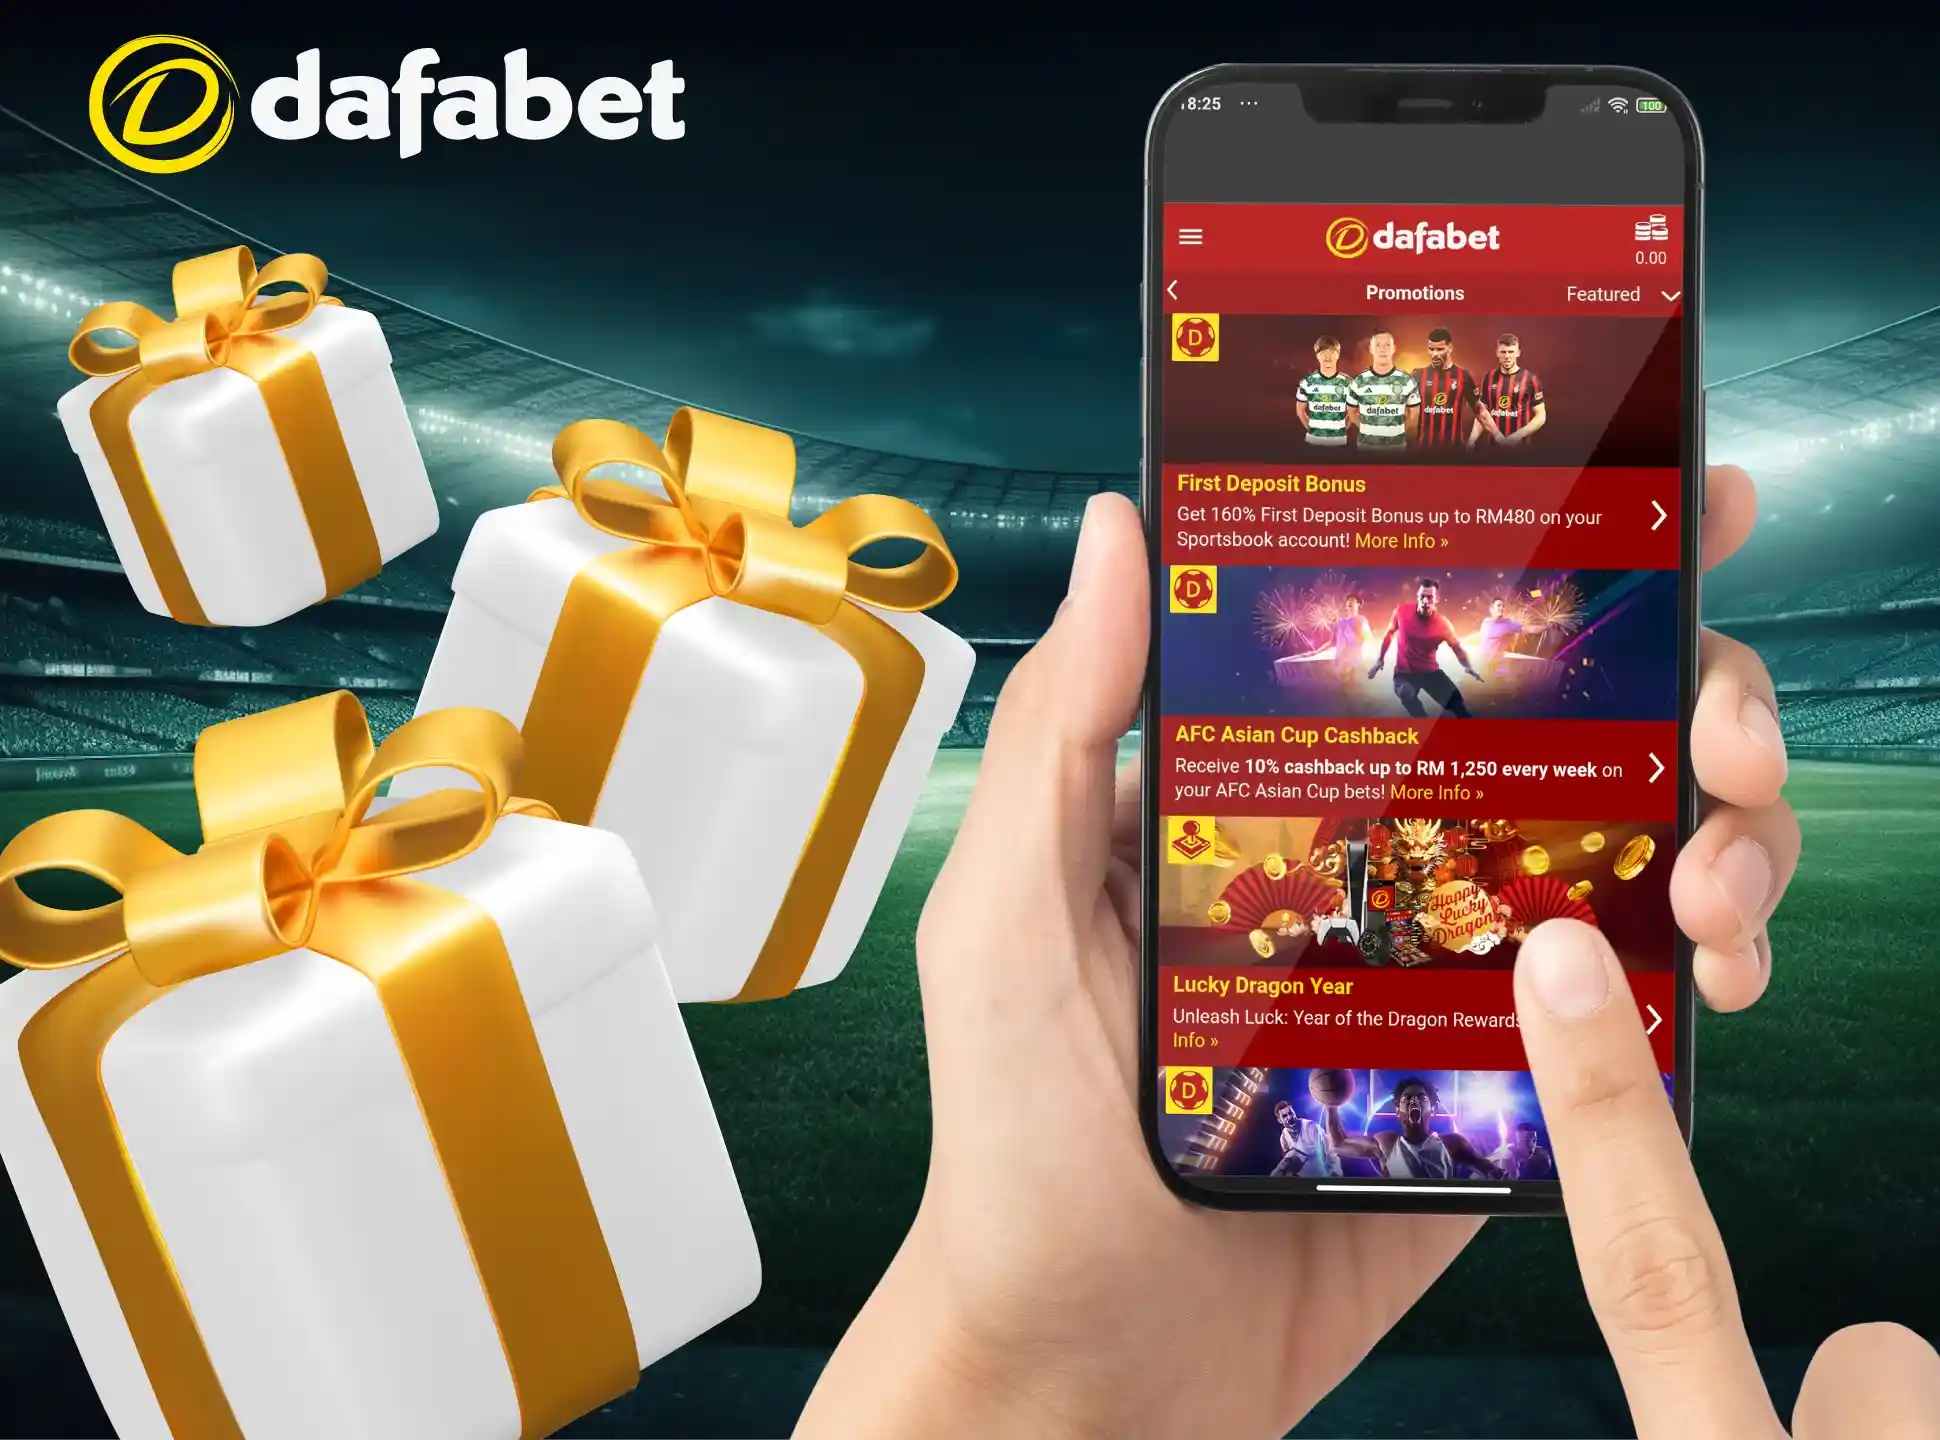 To get bonuses on the Dafabet app make your first deposit.